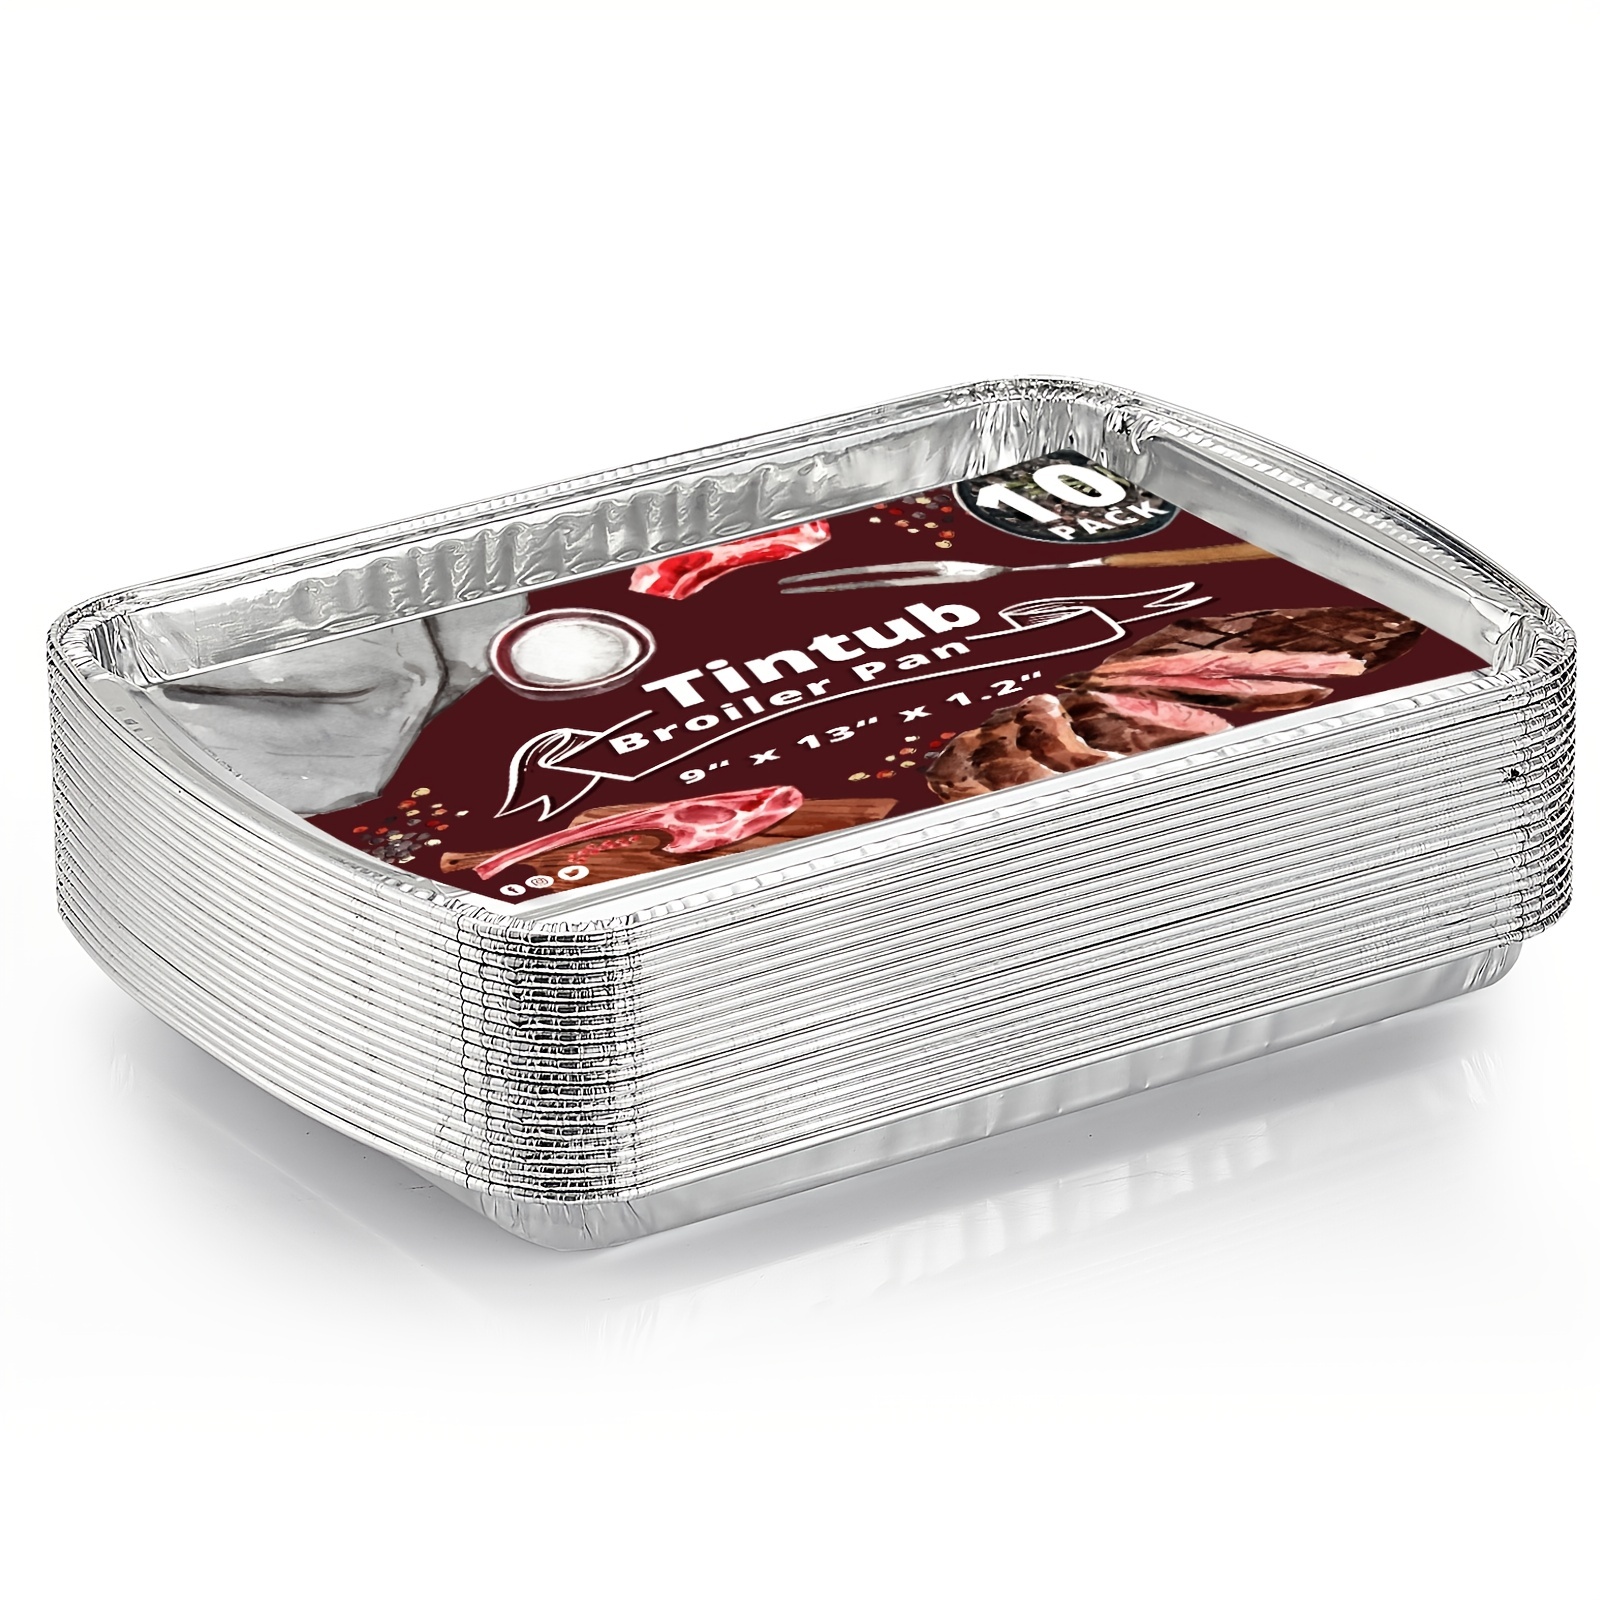 Aluminum 9x13 Cake Pan | NESCO